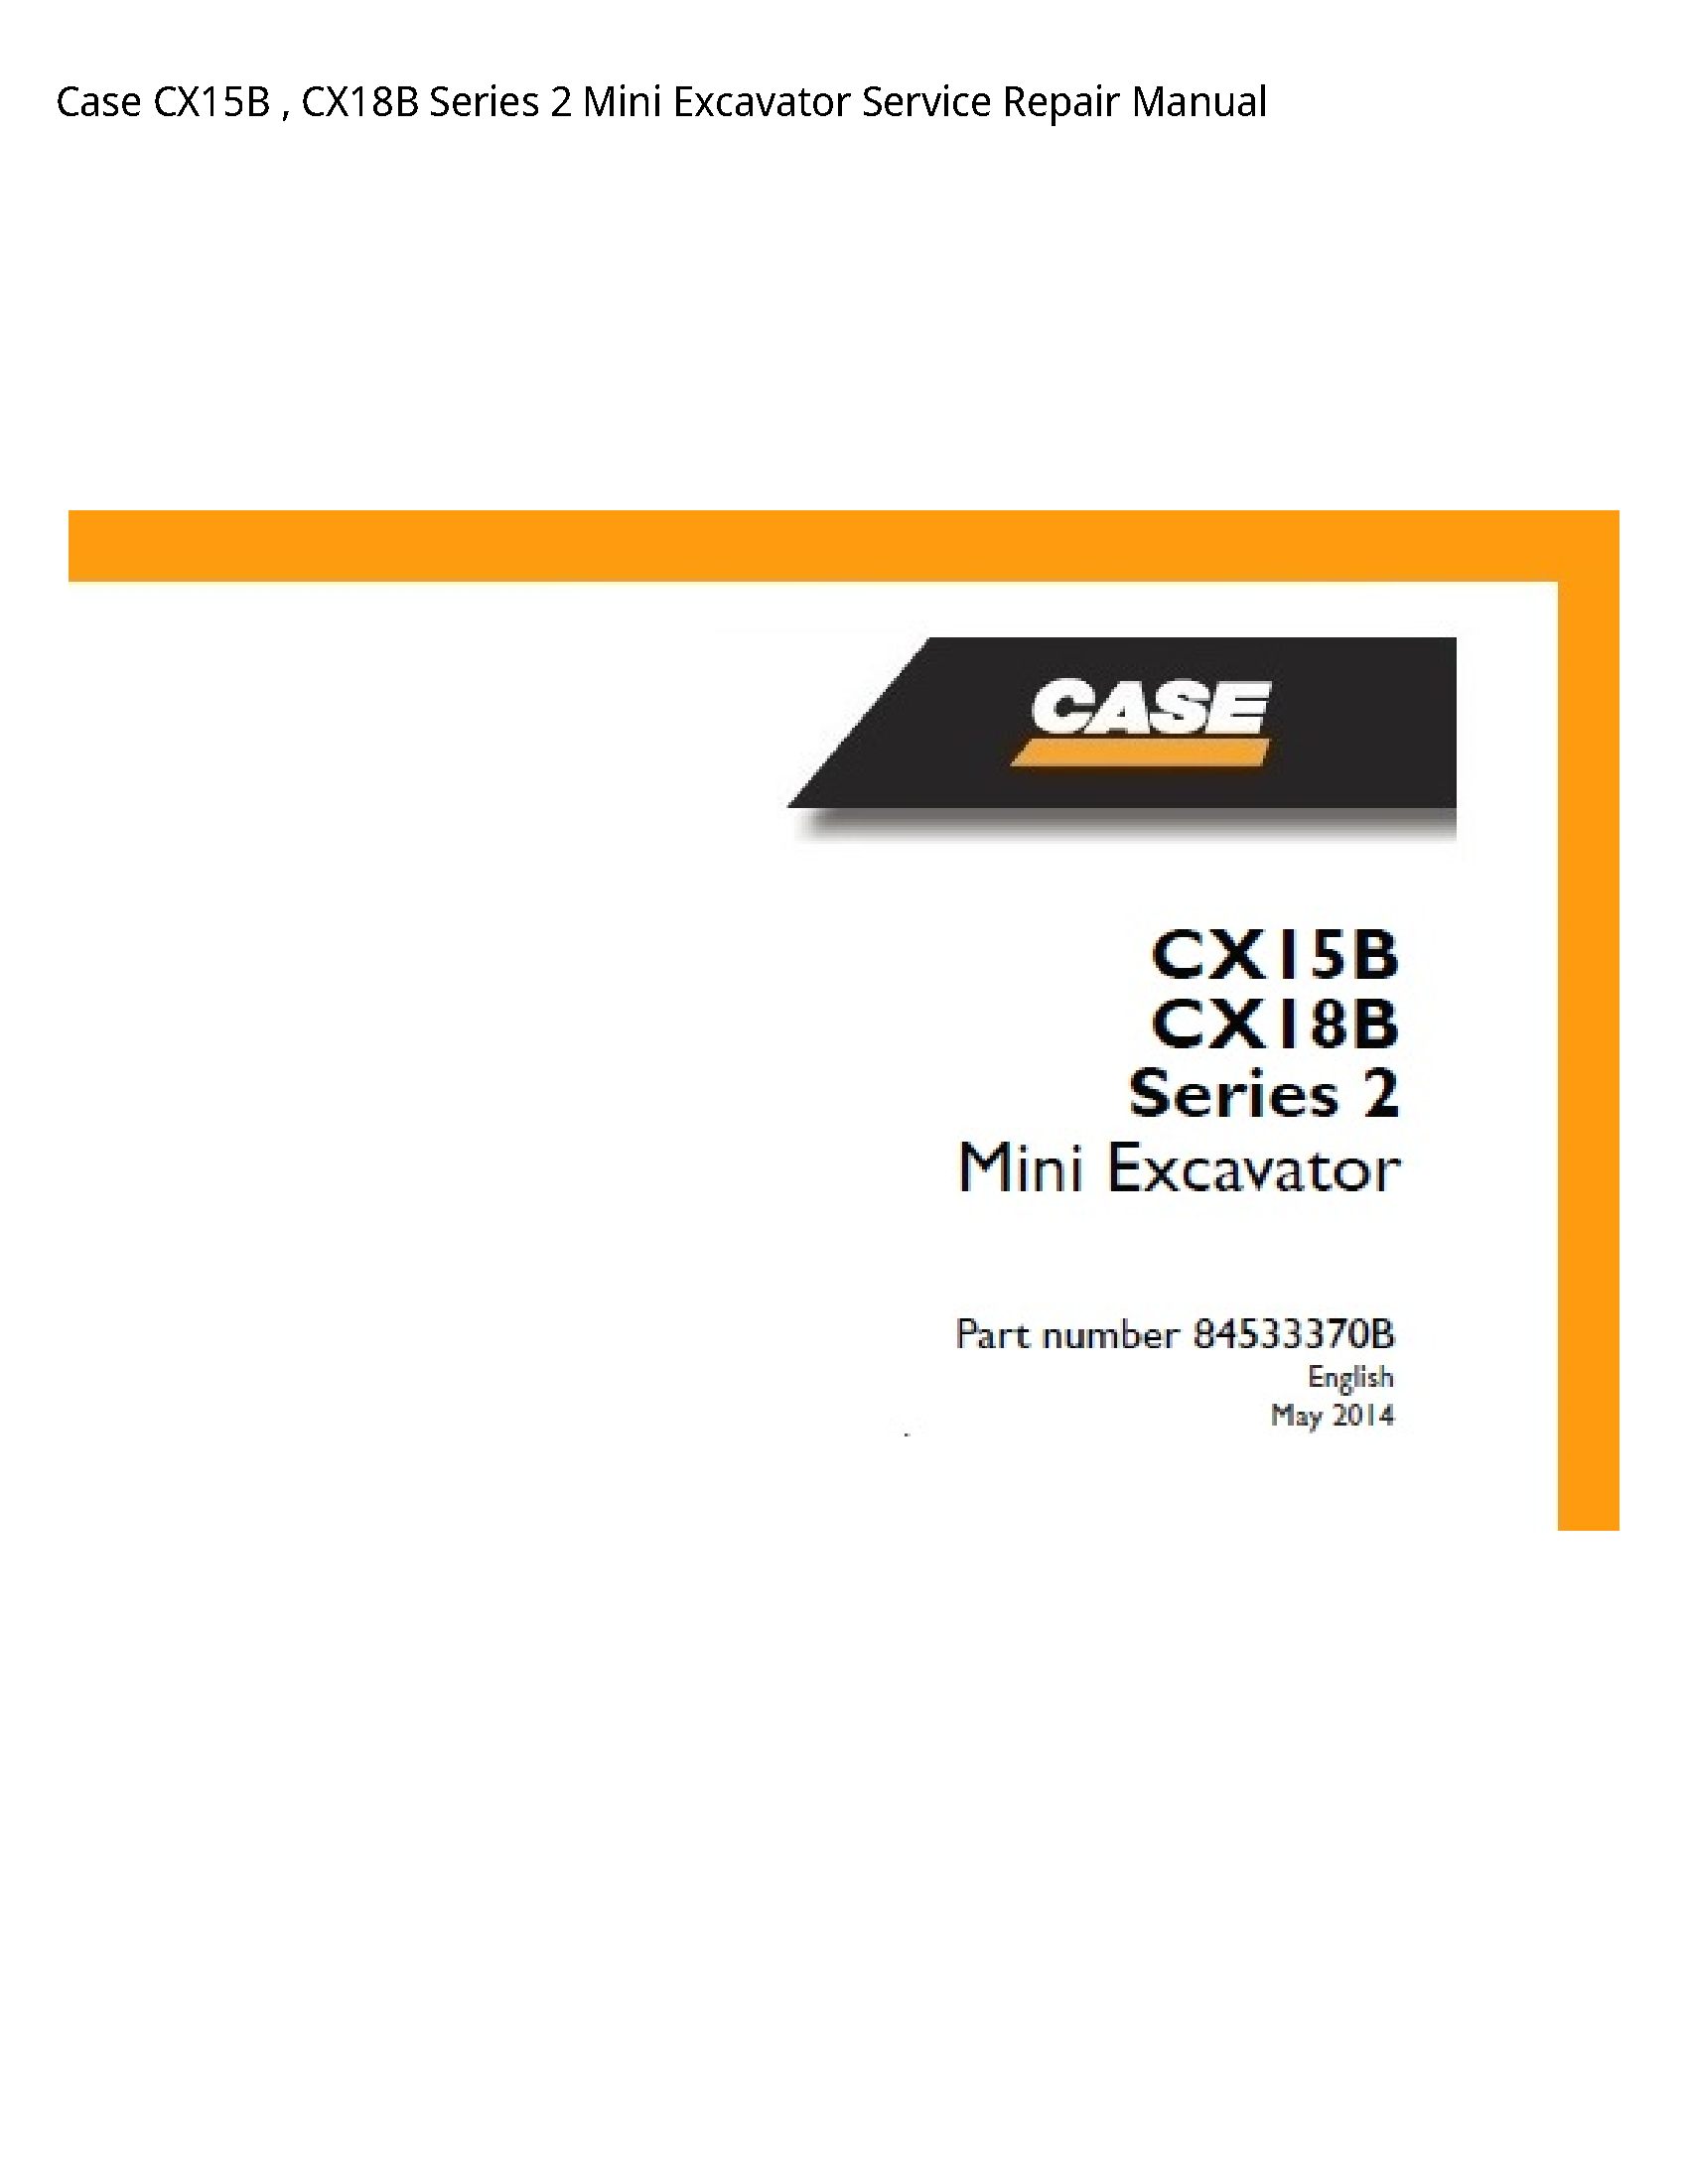 Case/Case IH CX15B Series Mini Excavator manual